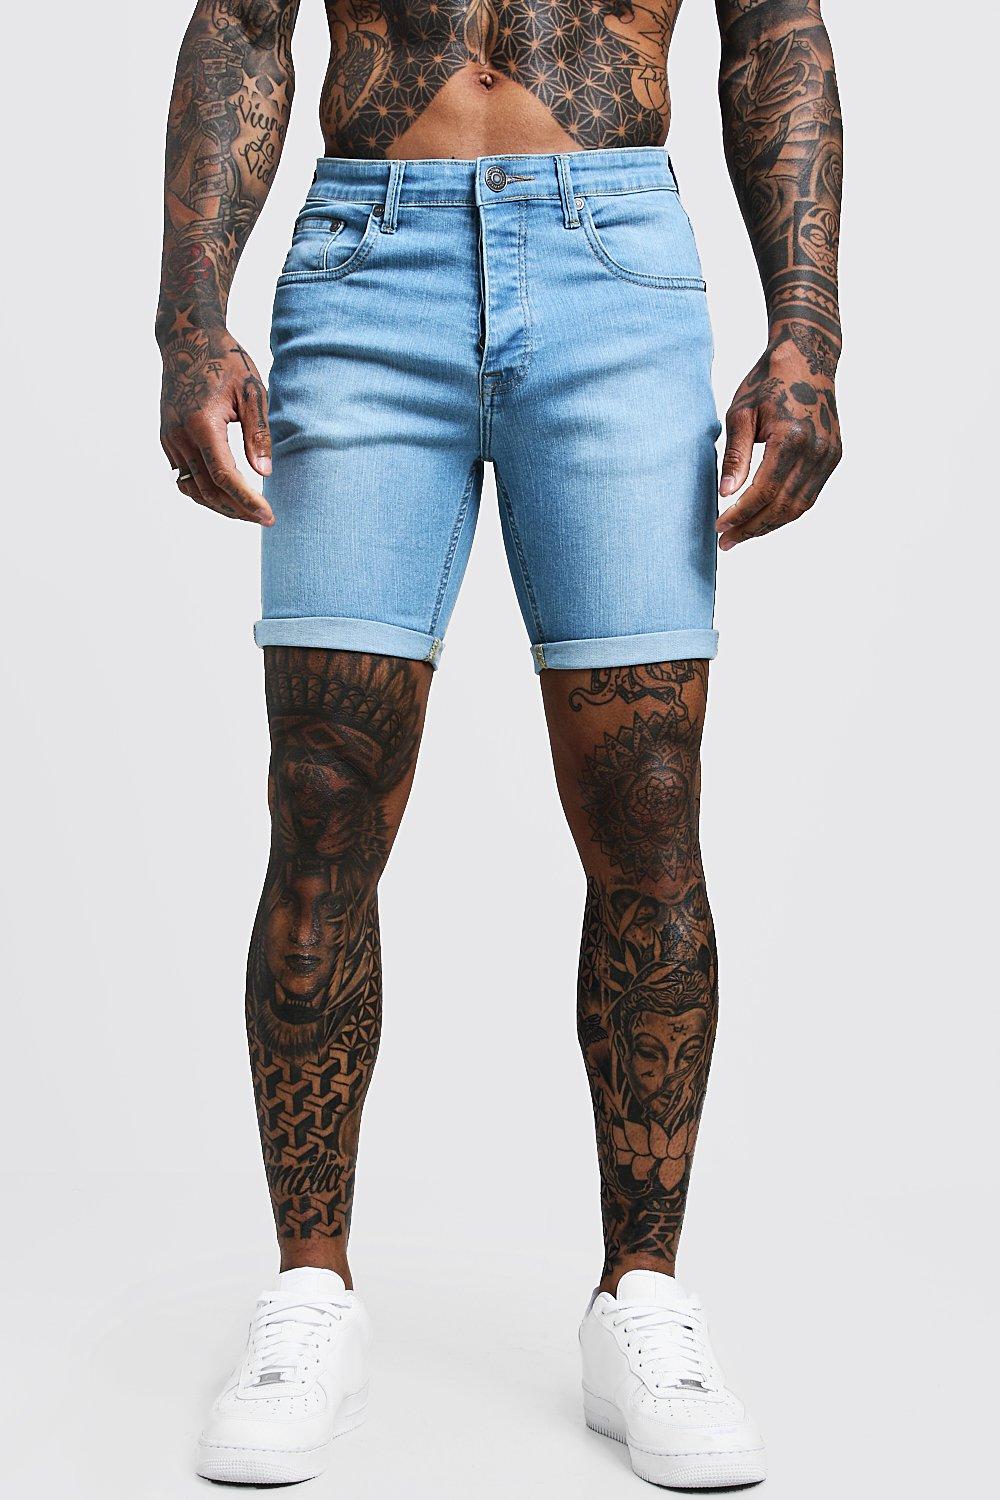 blue jean mens shorts